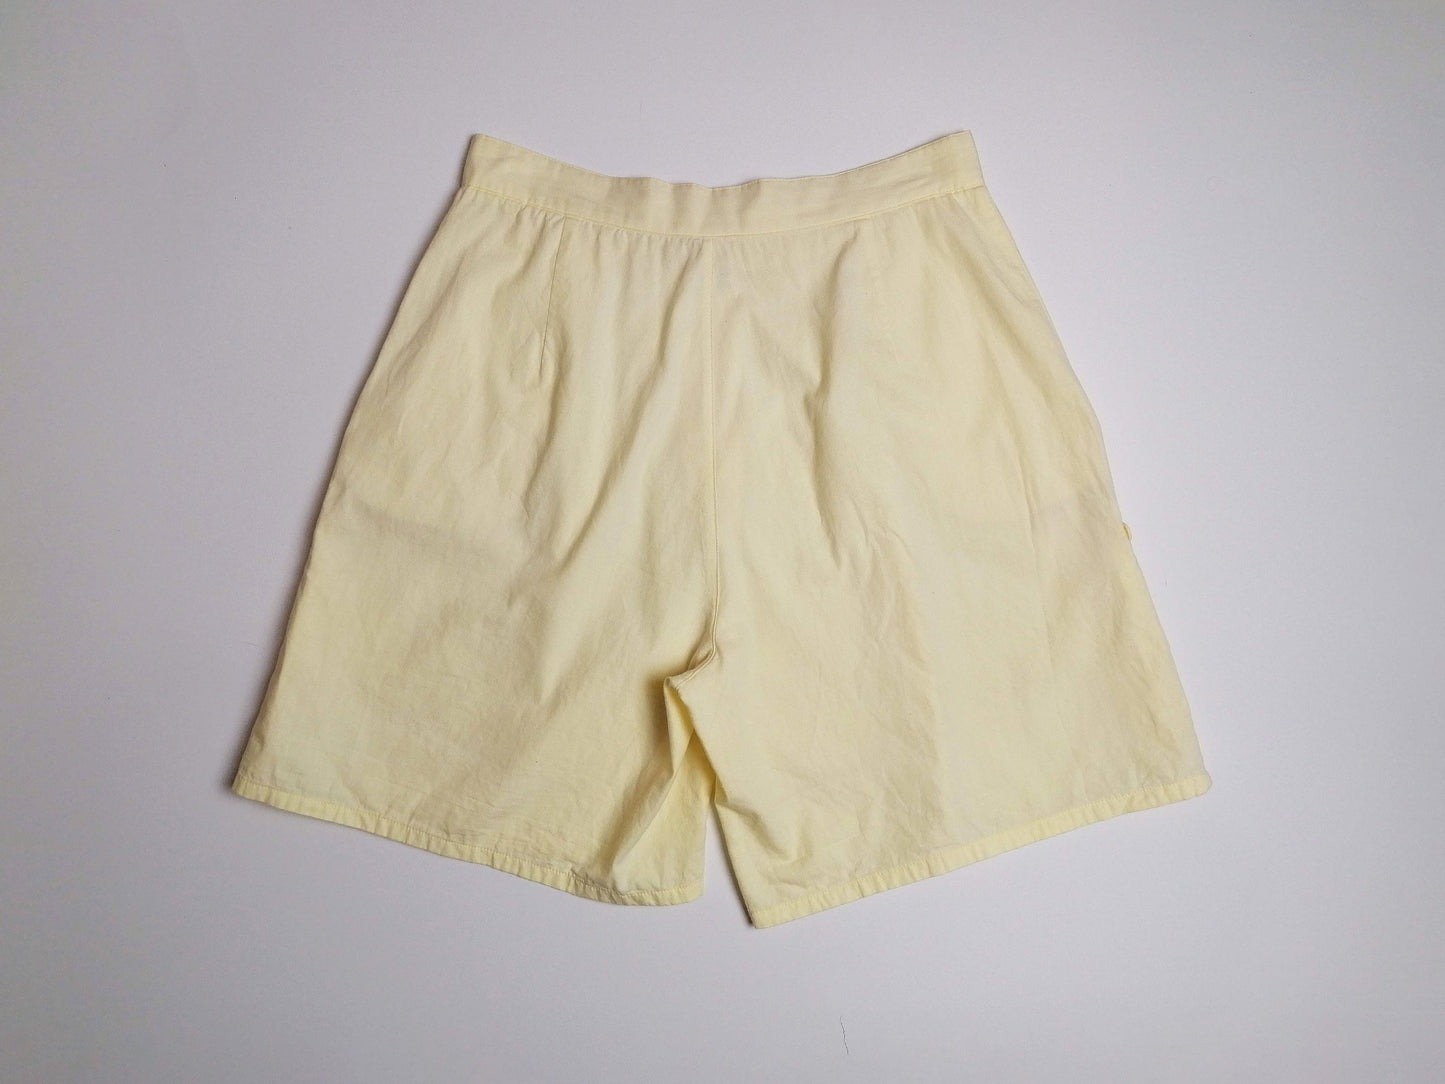 High Waist Retro Cotton Shorts - size XS-S / 40